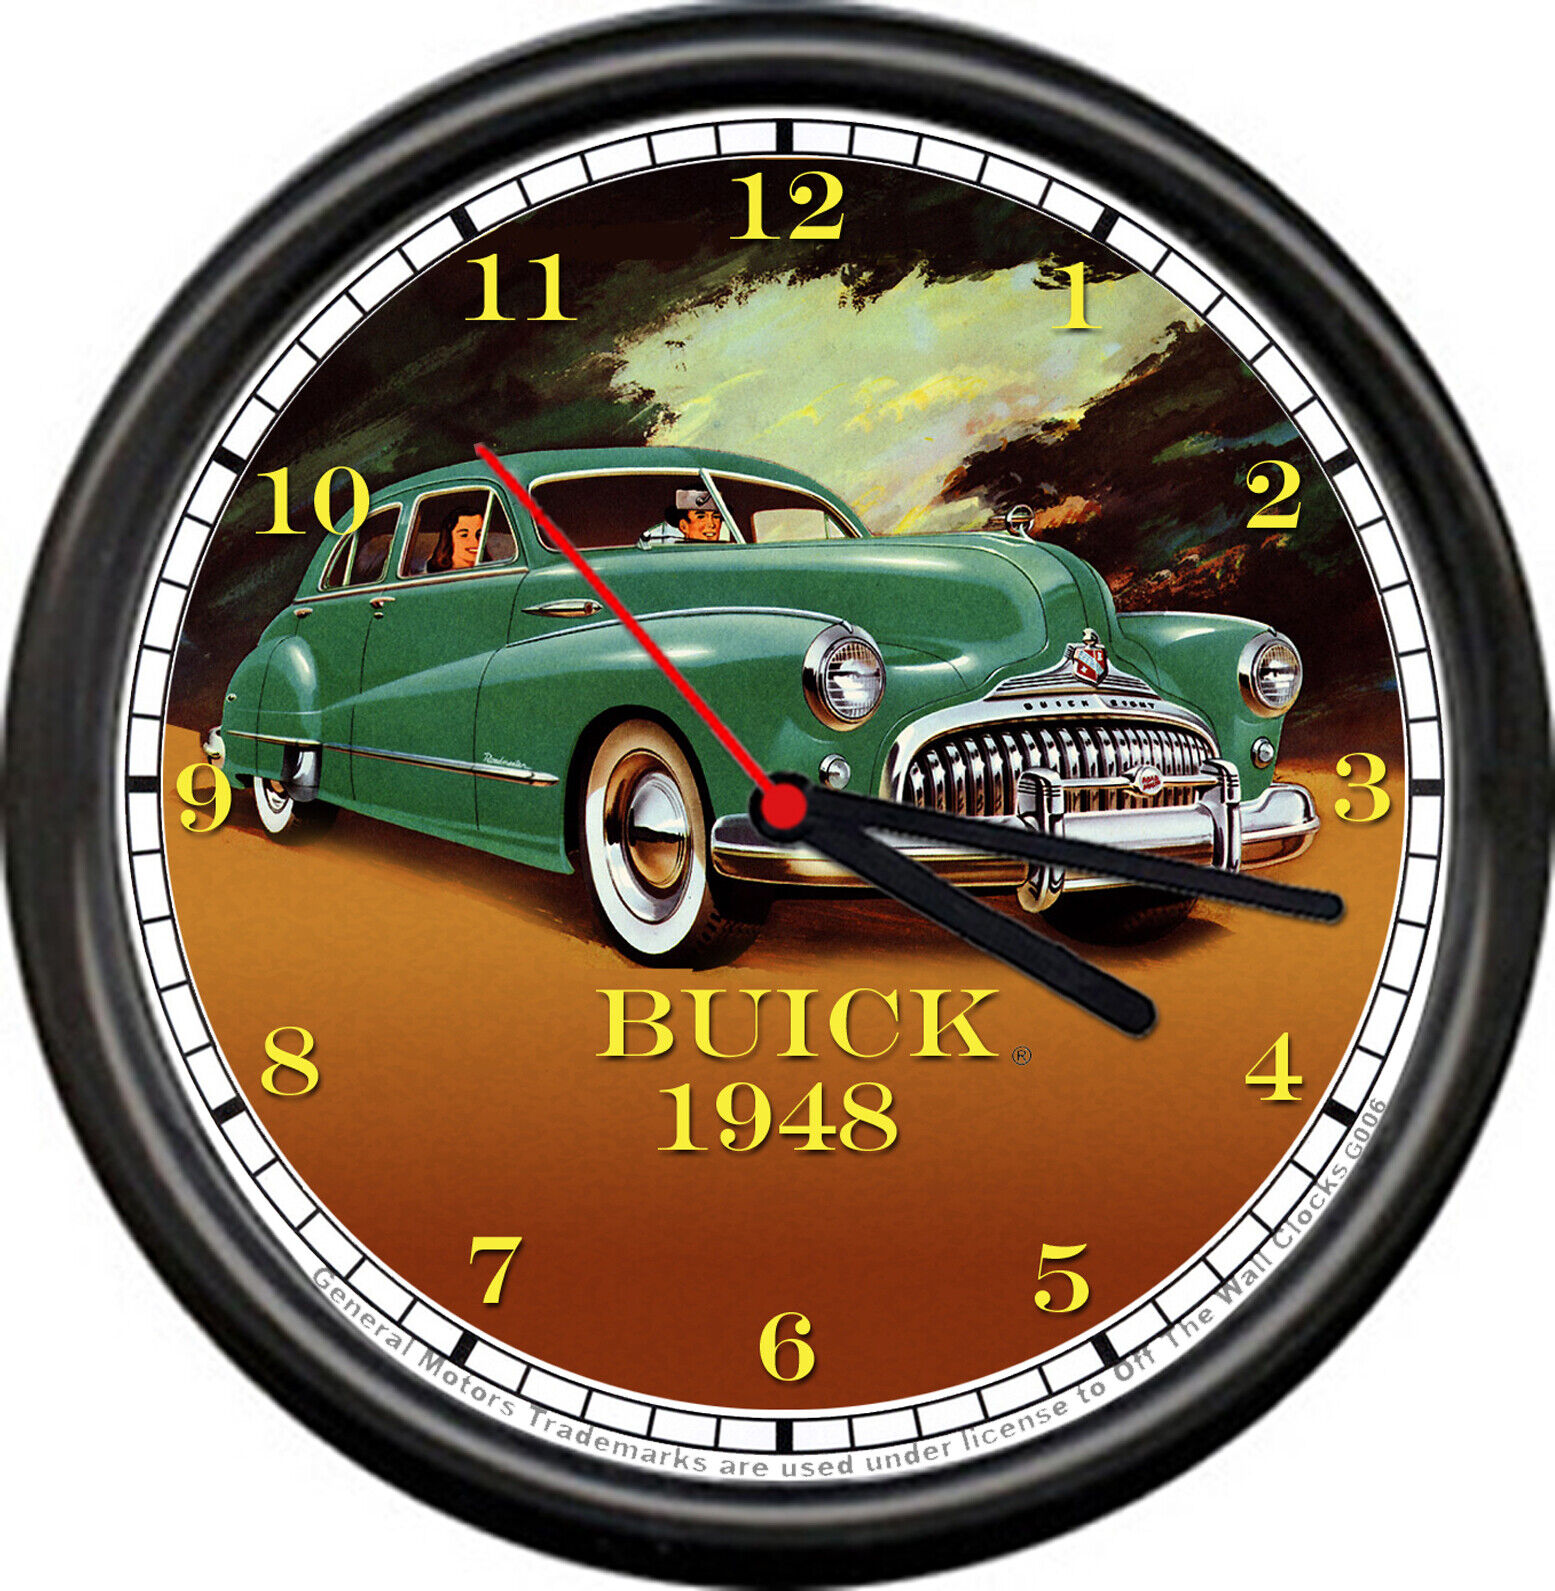 Licensed 1948 Buick Green 4 Door Sedan White Walls General Motors Wall Clock